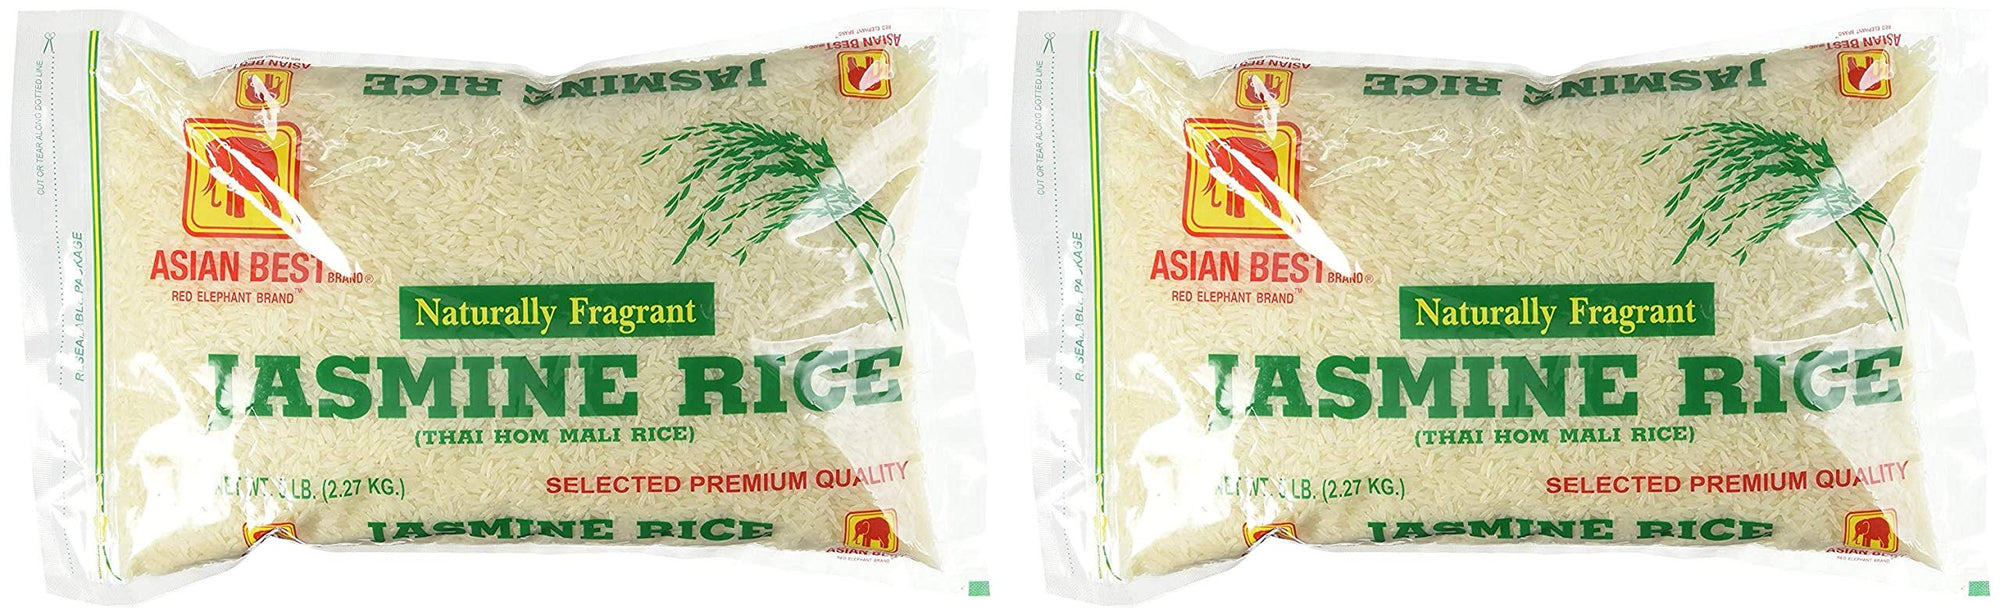 Asian Best Jasmine Rice, 5 Pound Pack of 2